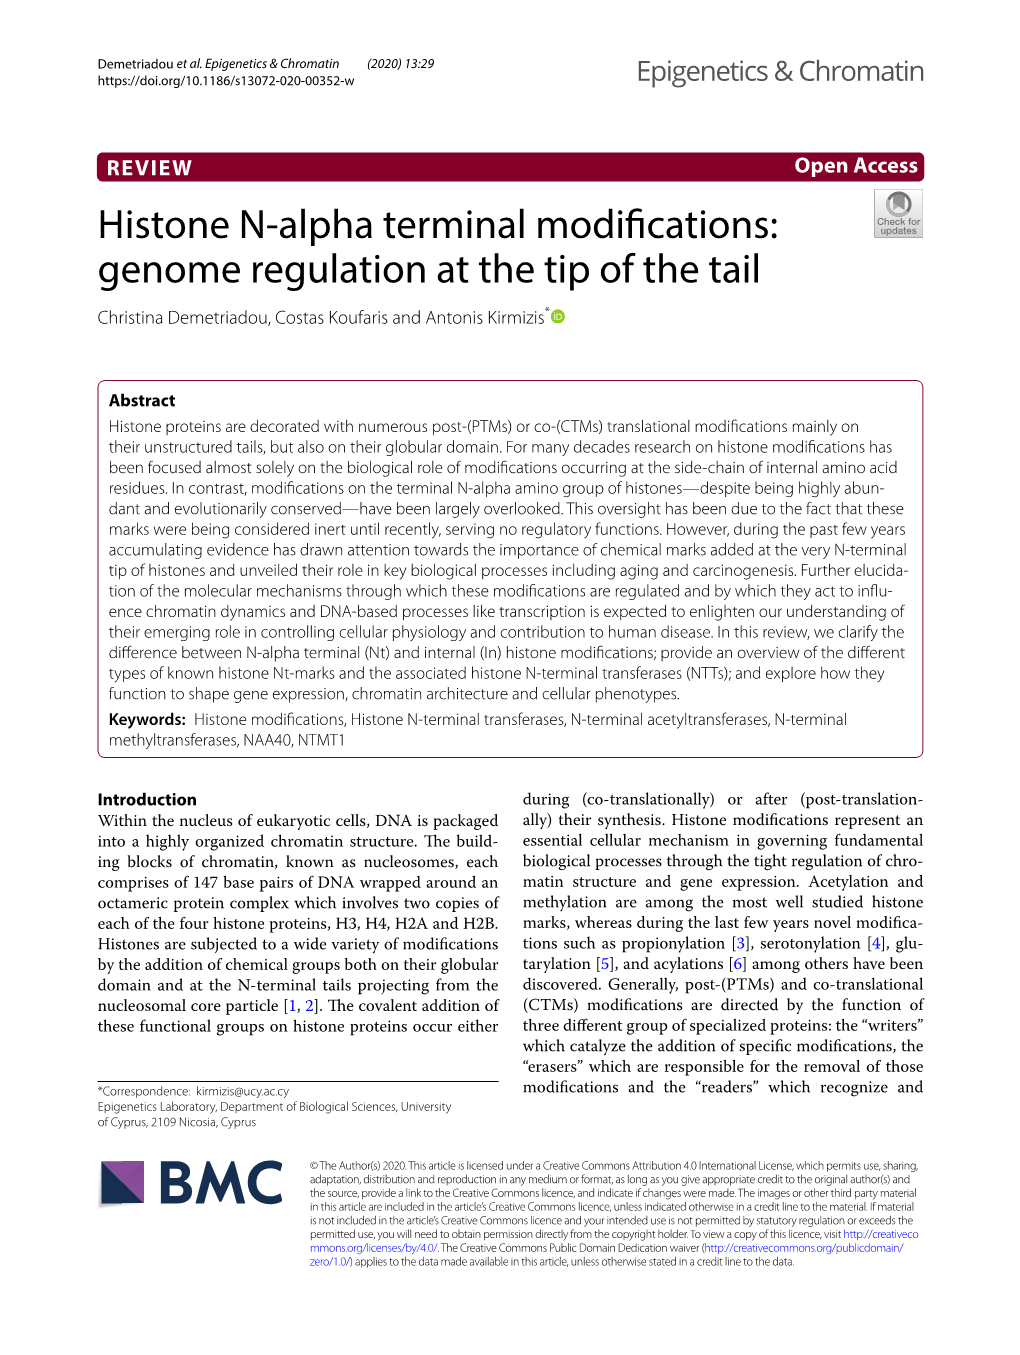 Histone N-Alpha Terminal Modifications: Genome Regulation At